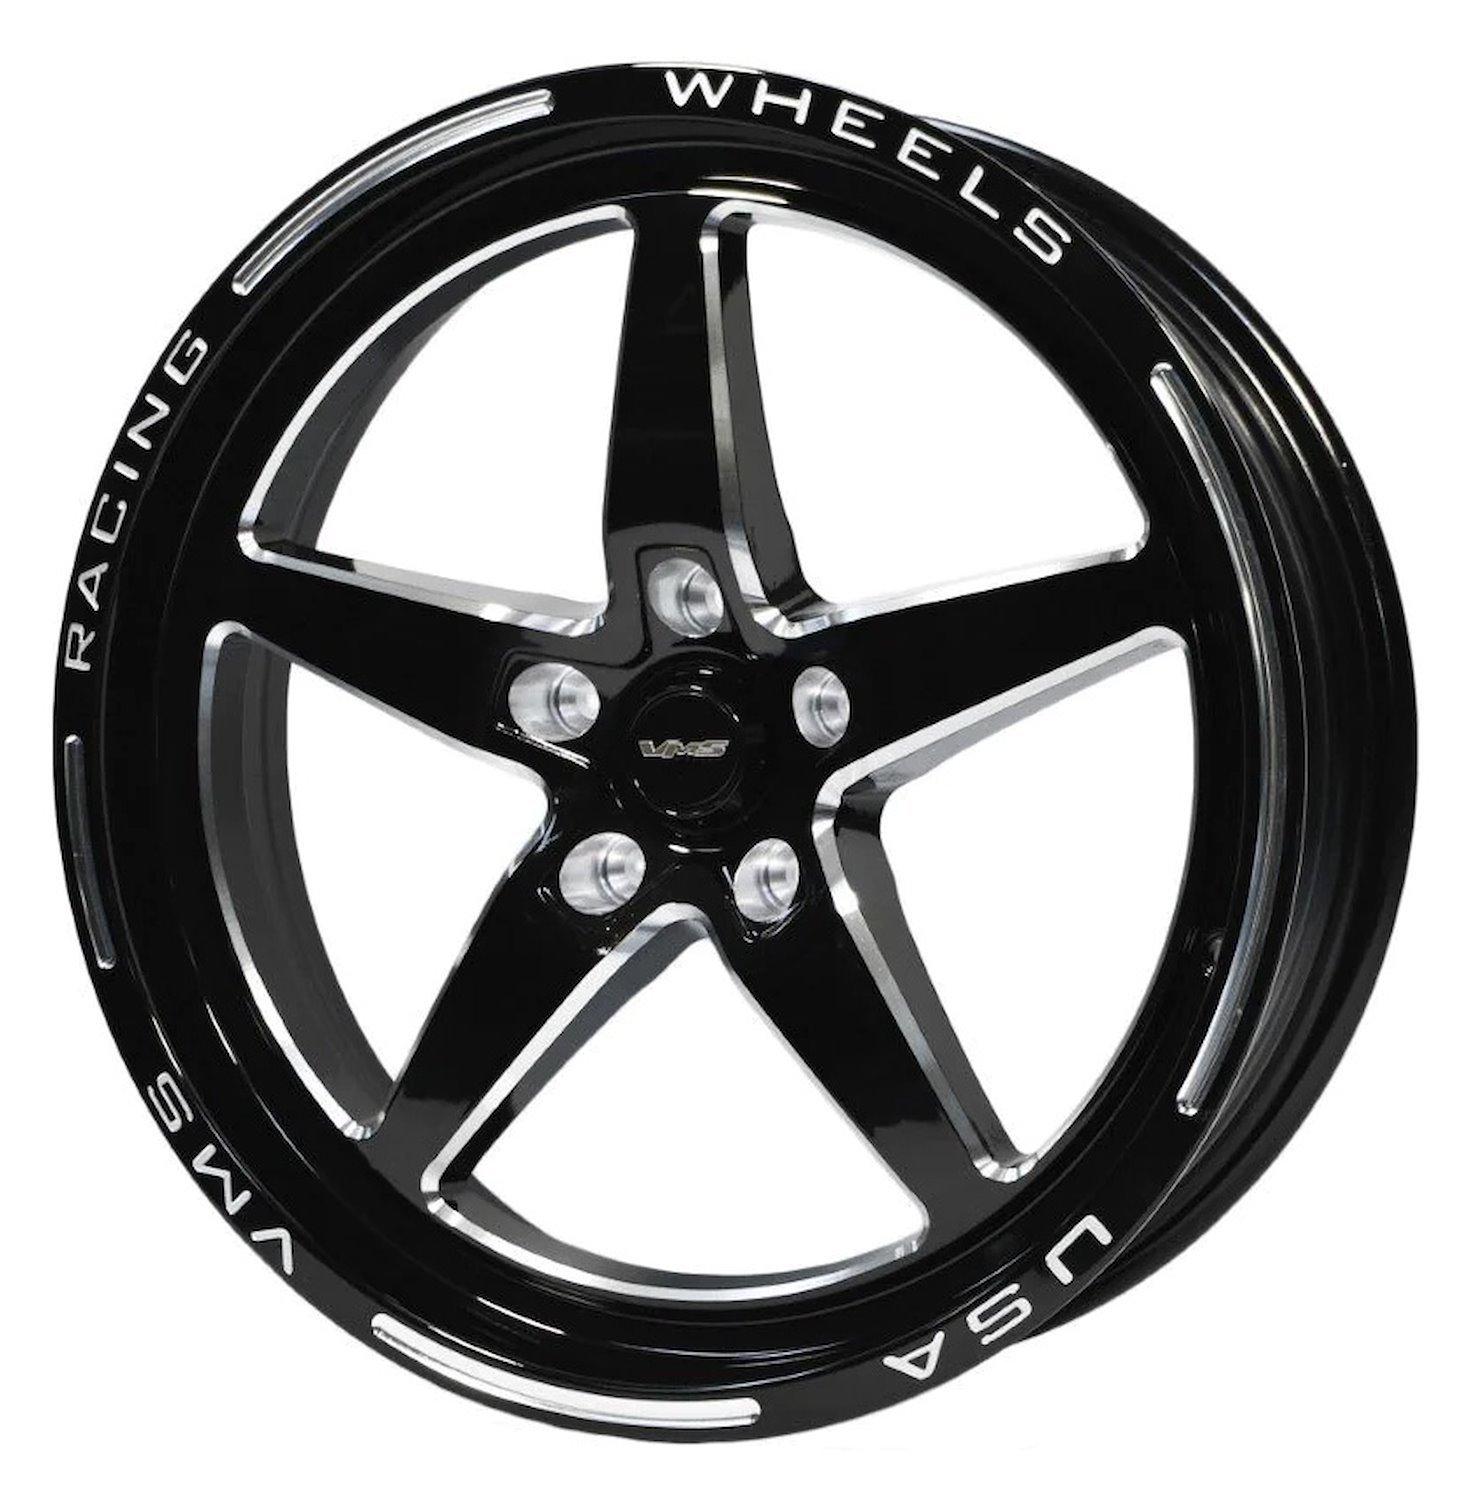 VWST024 V-Star Wheel, Size: 17" x 4.5", Bolt Pattern: 5 x 4 1/2" (114.3 mm) [Finish: Gloss Black Milled]